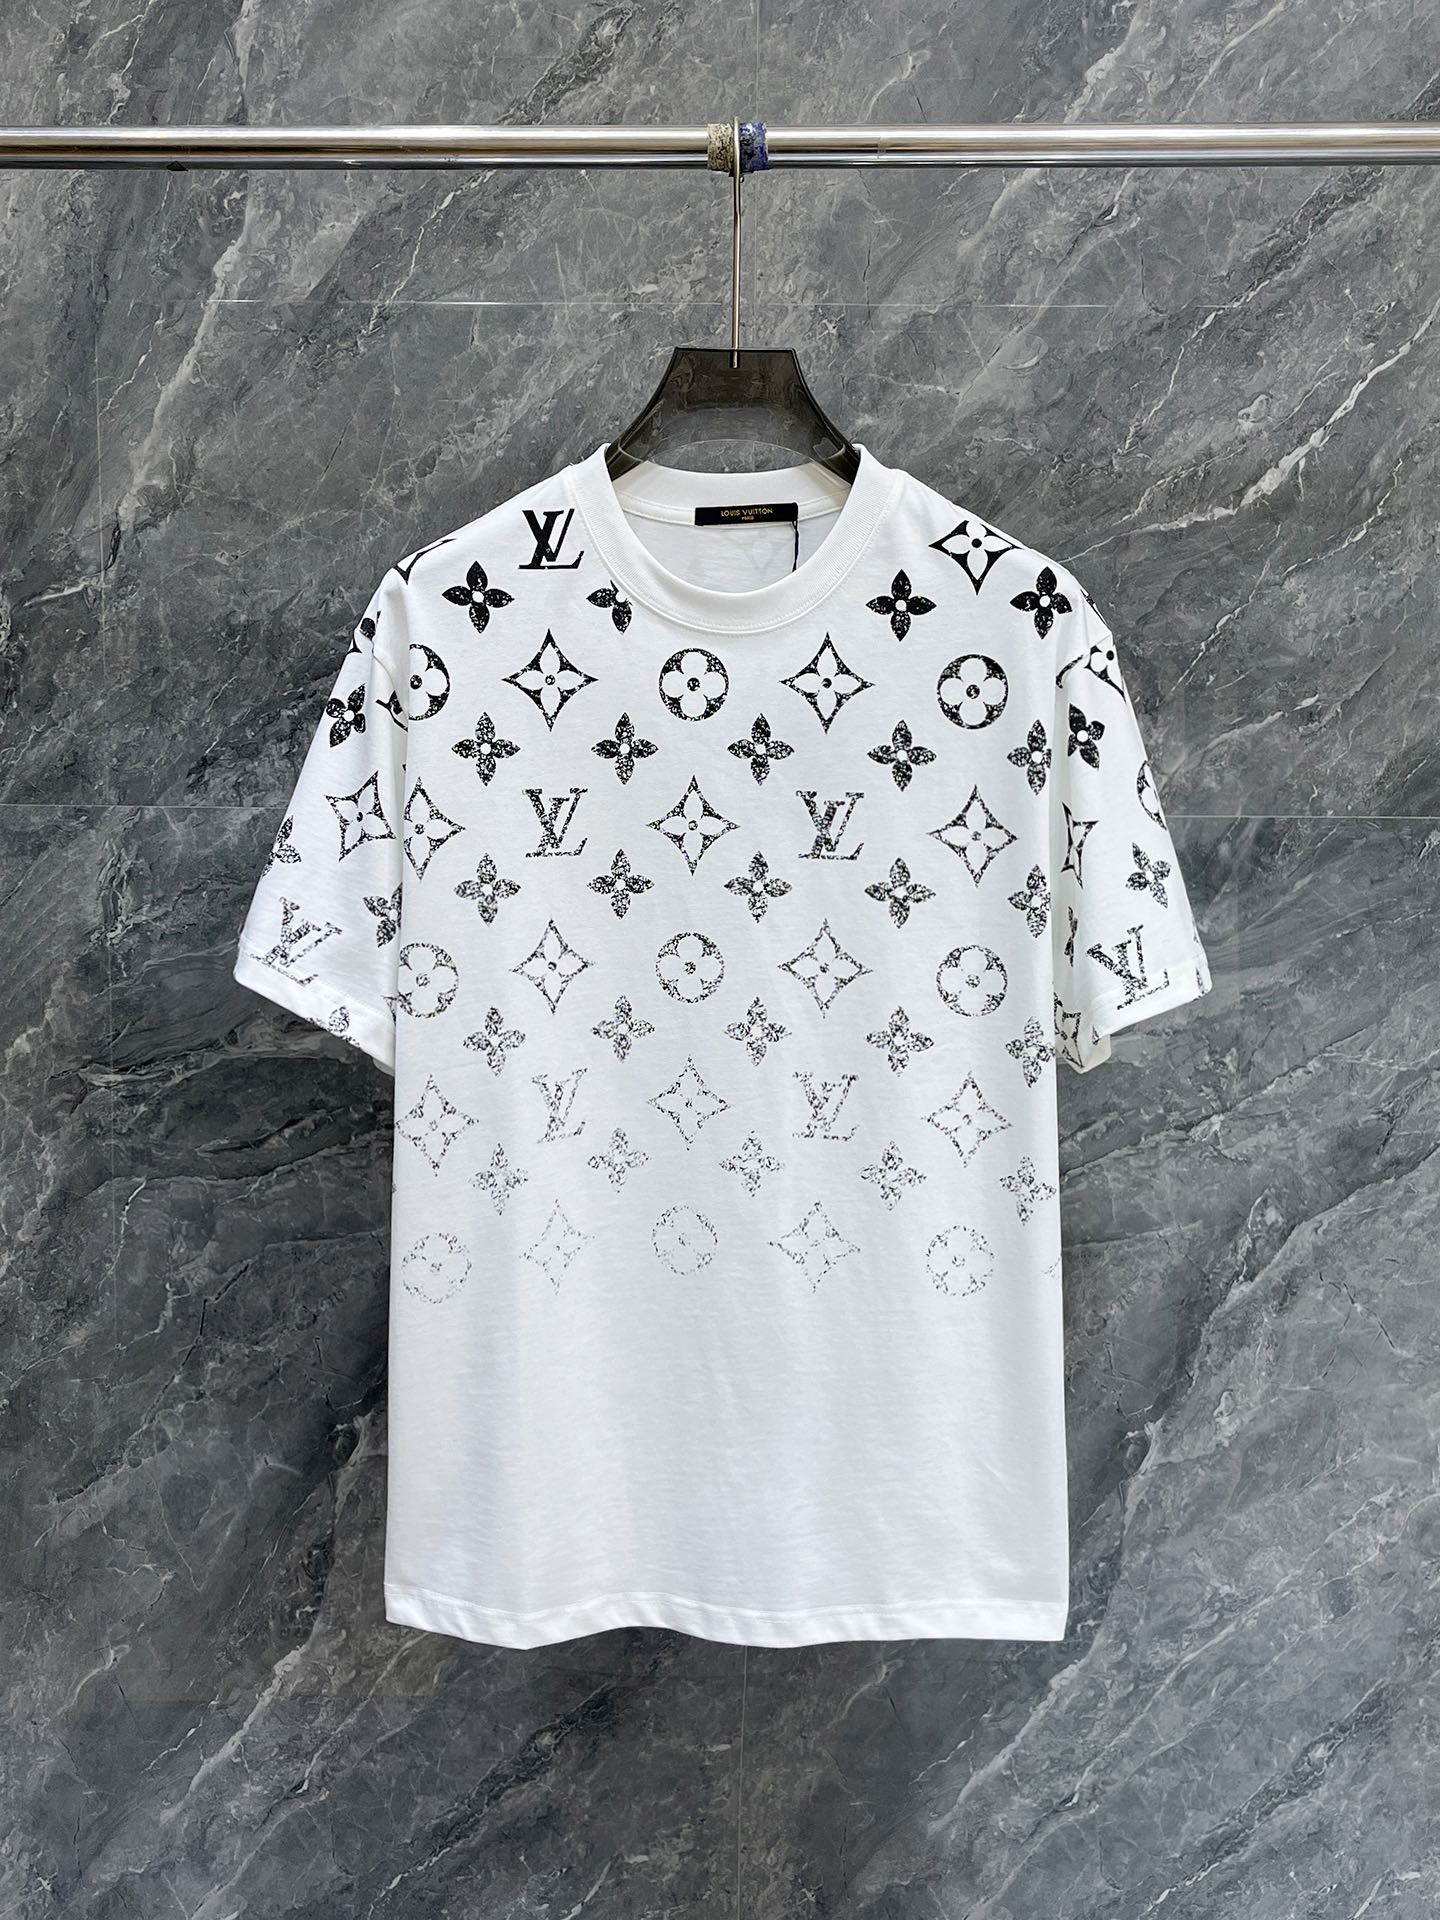 Louis Vuitton AAA+
 Clothing T-Shirt Black White Printing Cotton Short Sleeve